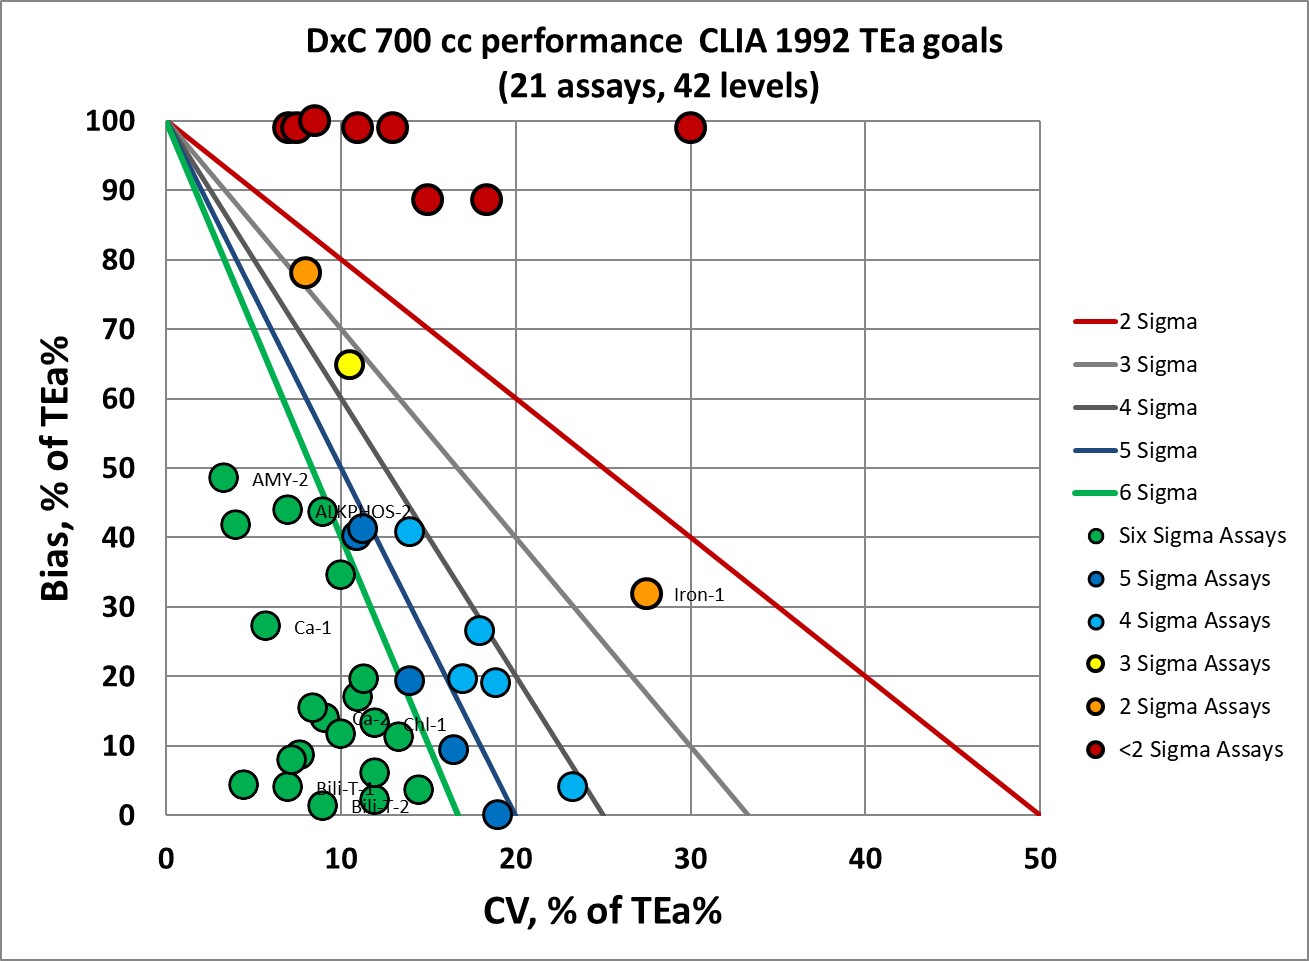 2020 dxc 700 performance according to CLIA 1992 goals